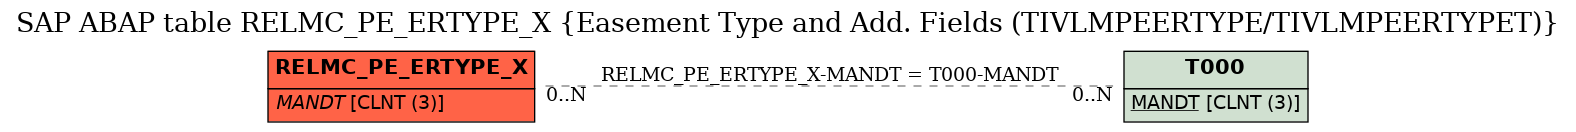 E-R Diagram for table RELMC_PE_ERTYPE_X (Easement Type and Add. Fields (TIVLMPEERTYPE/TIVLMPEERTYPET))